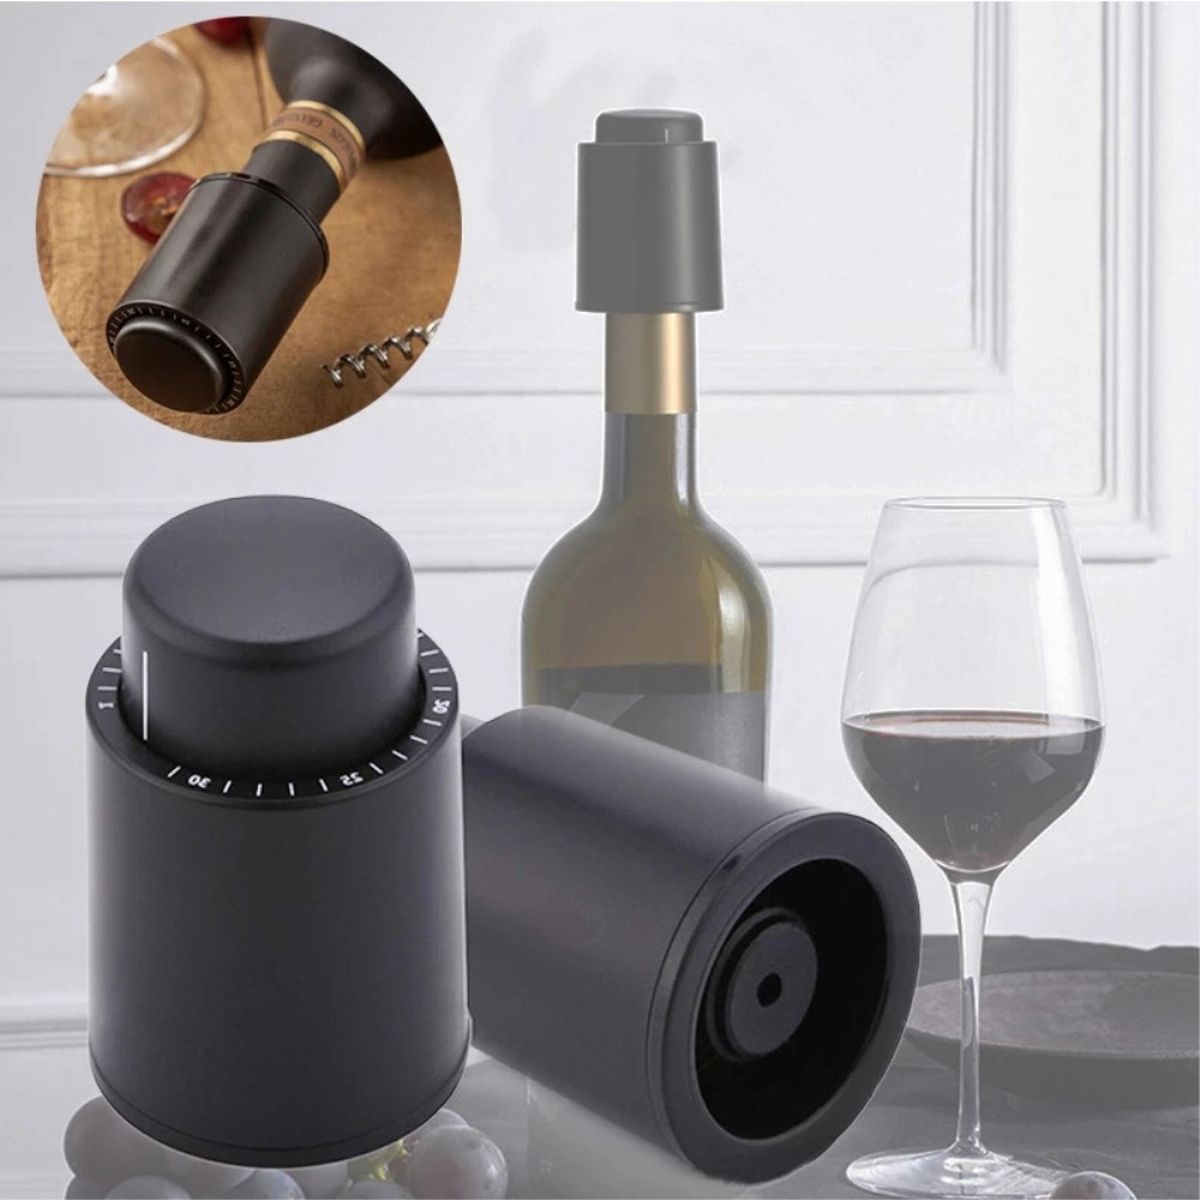 Weinverschluss - Vakuum Weinflaschenverschluss - Weinstopper - Verschlusskappe